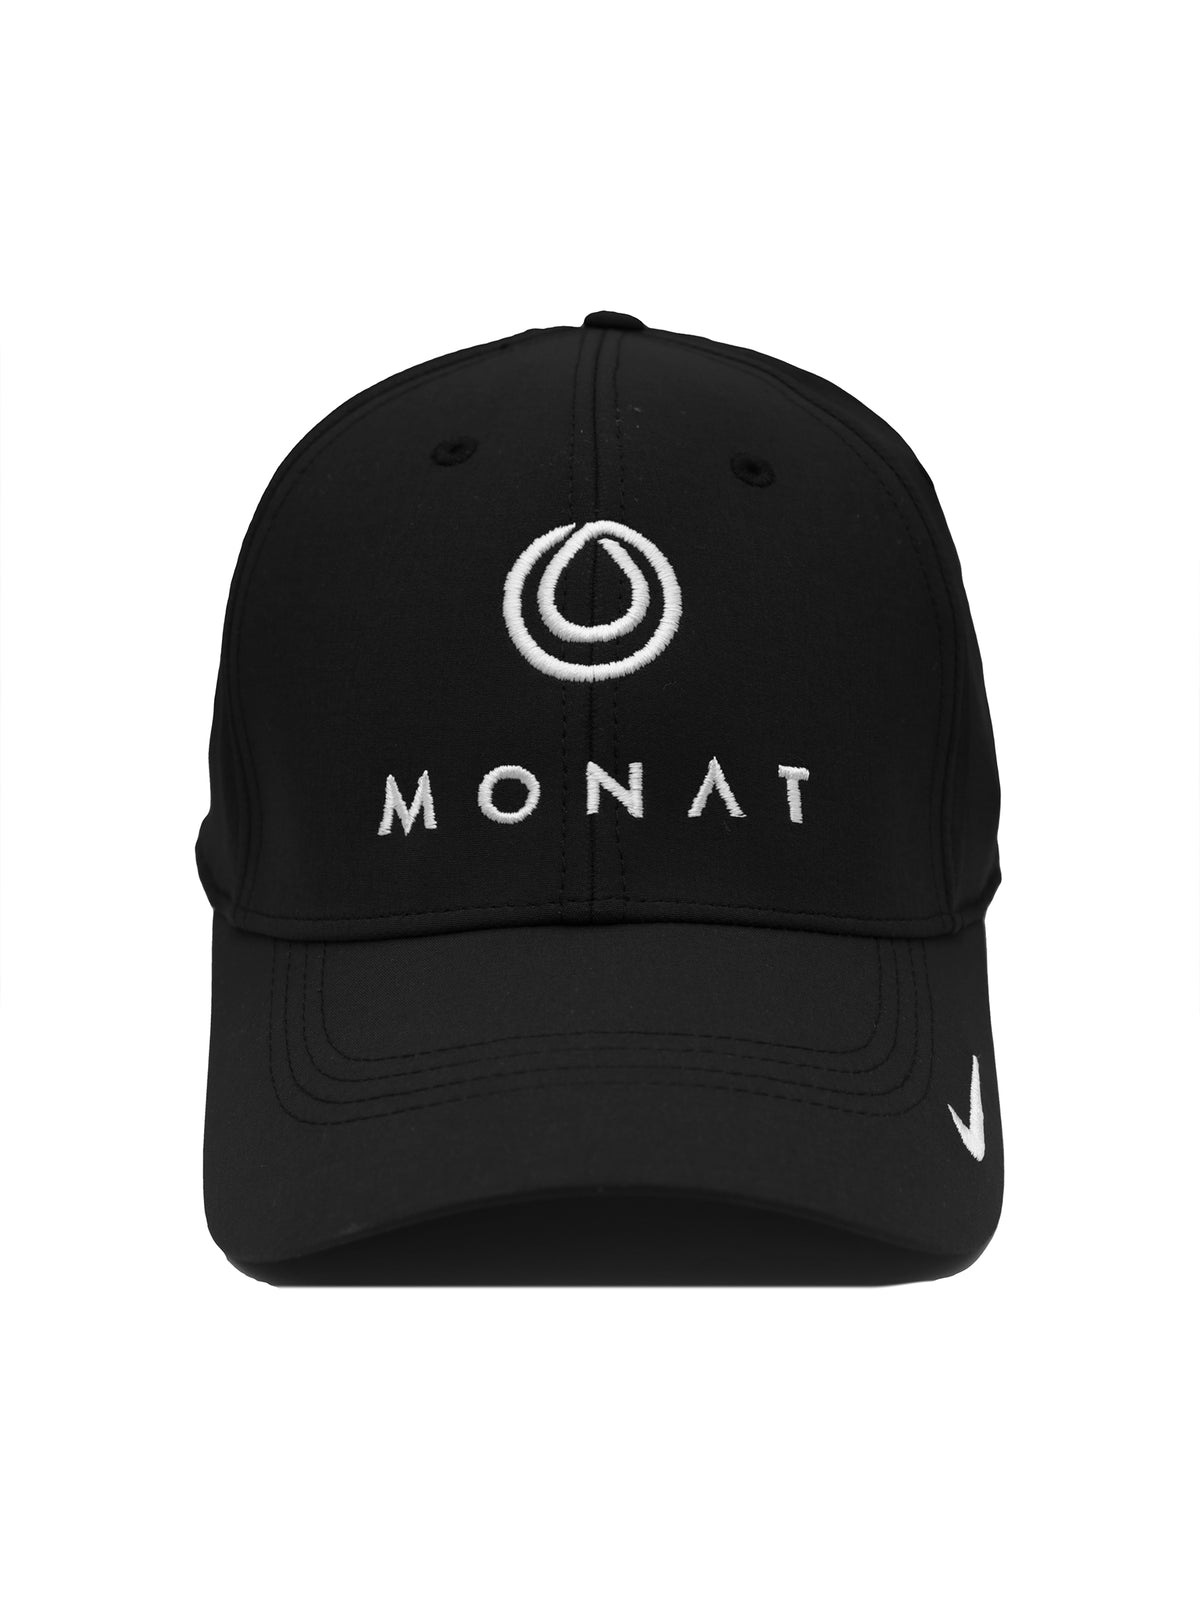 Monat Nike Cap by Monat Gear